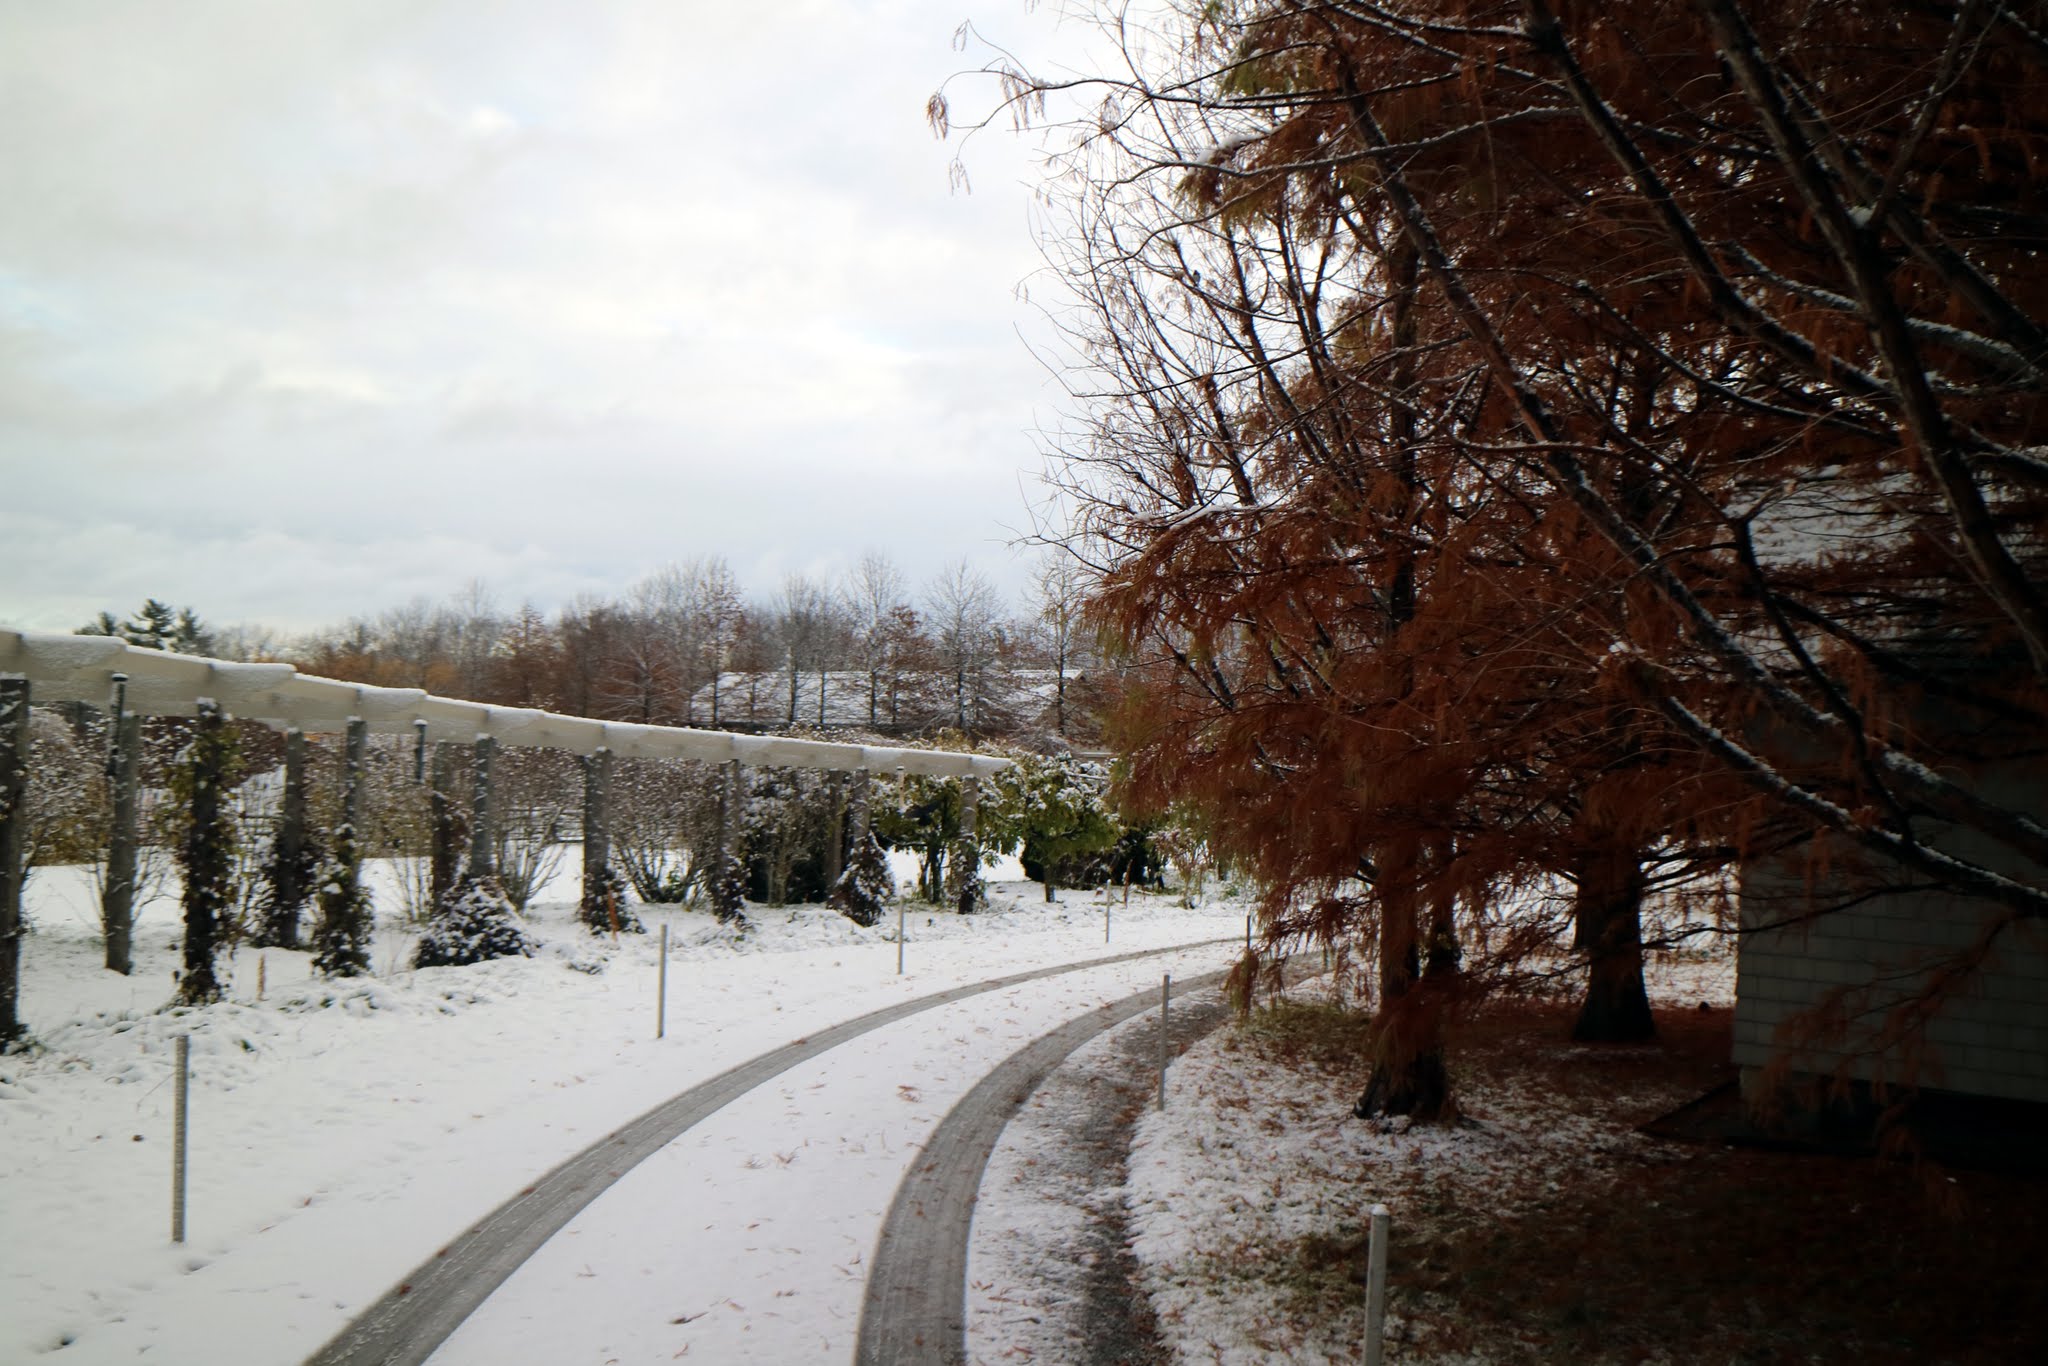 Autumn in Winter  A widespread snowfall in November creates